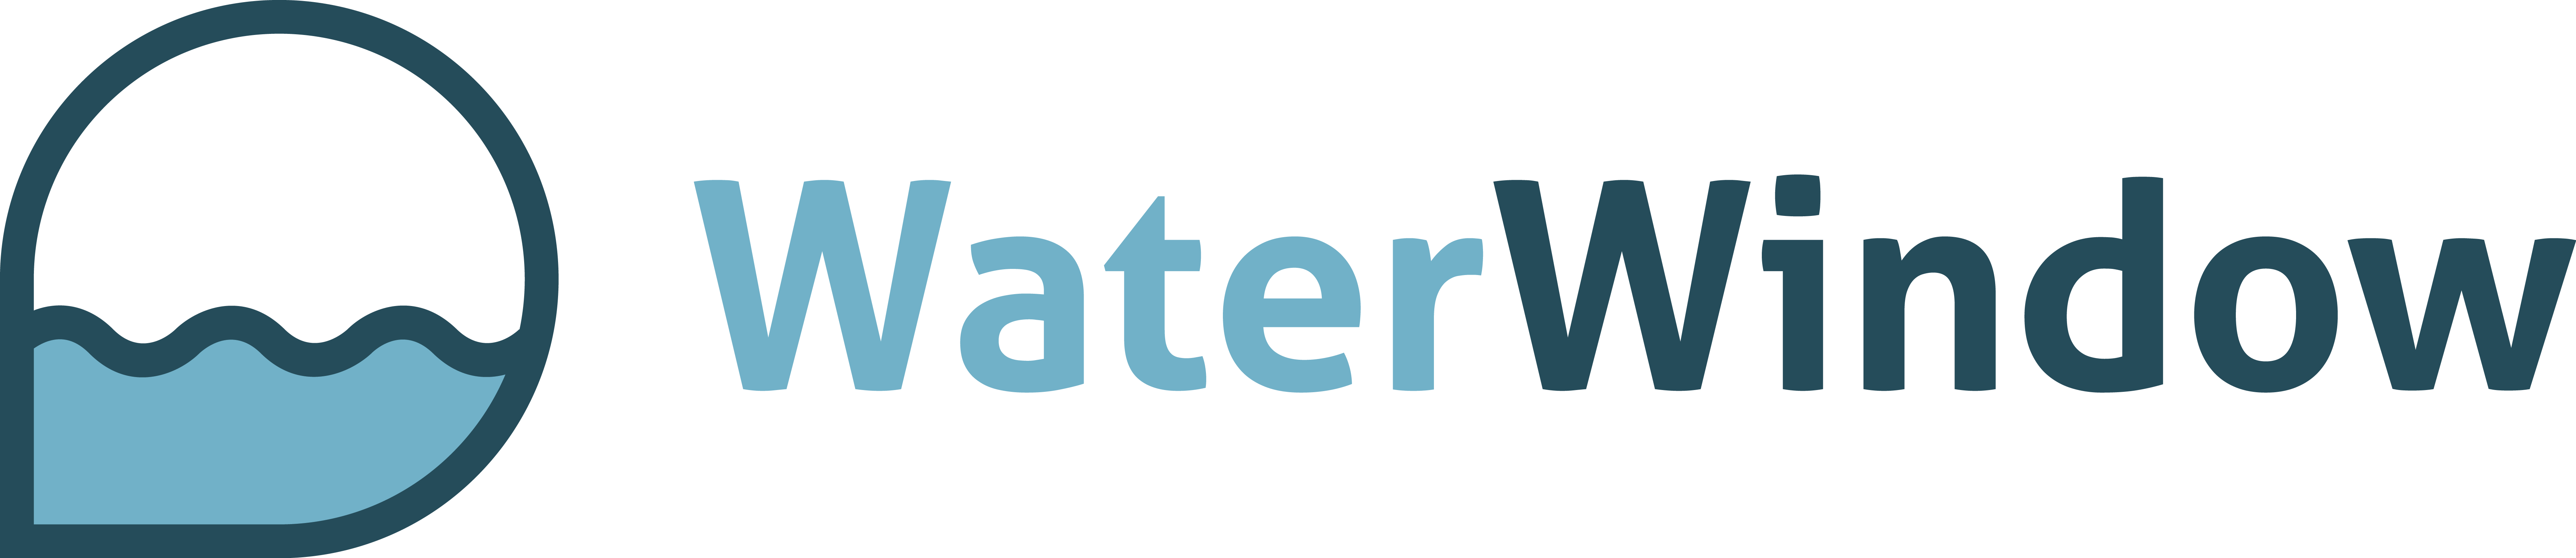 Waterwindow logo